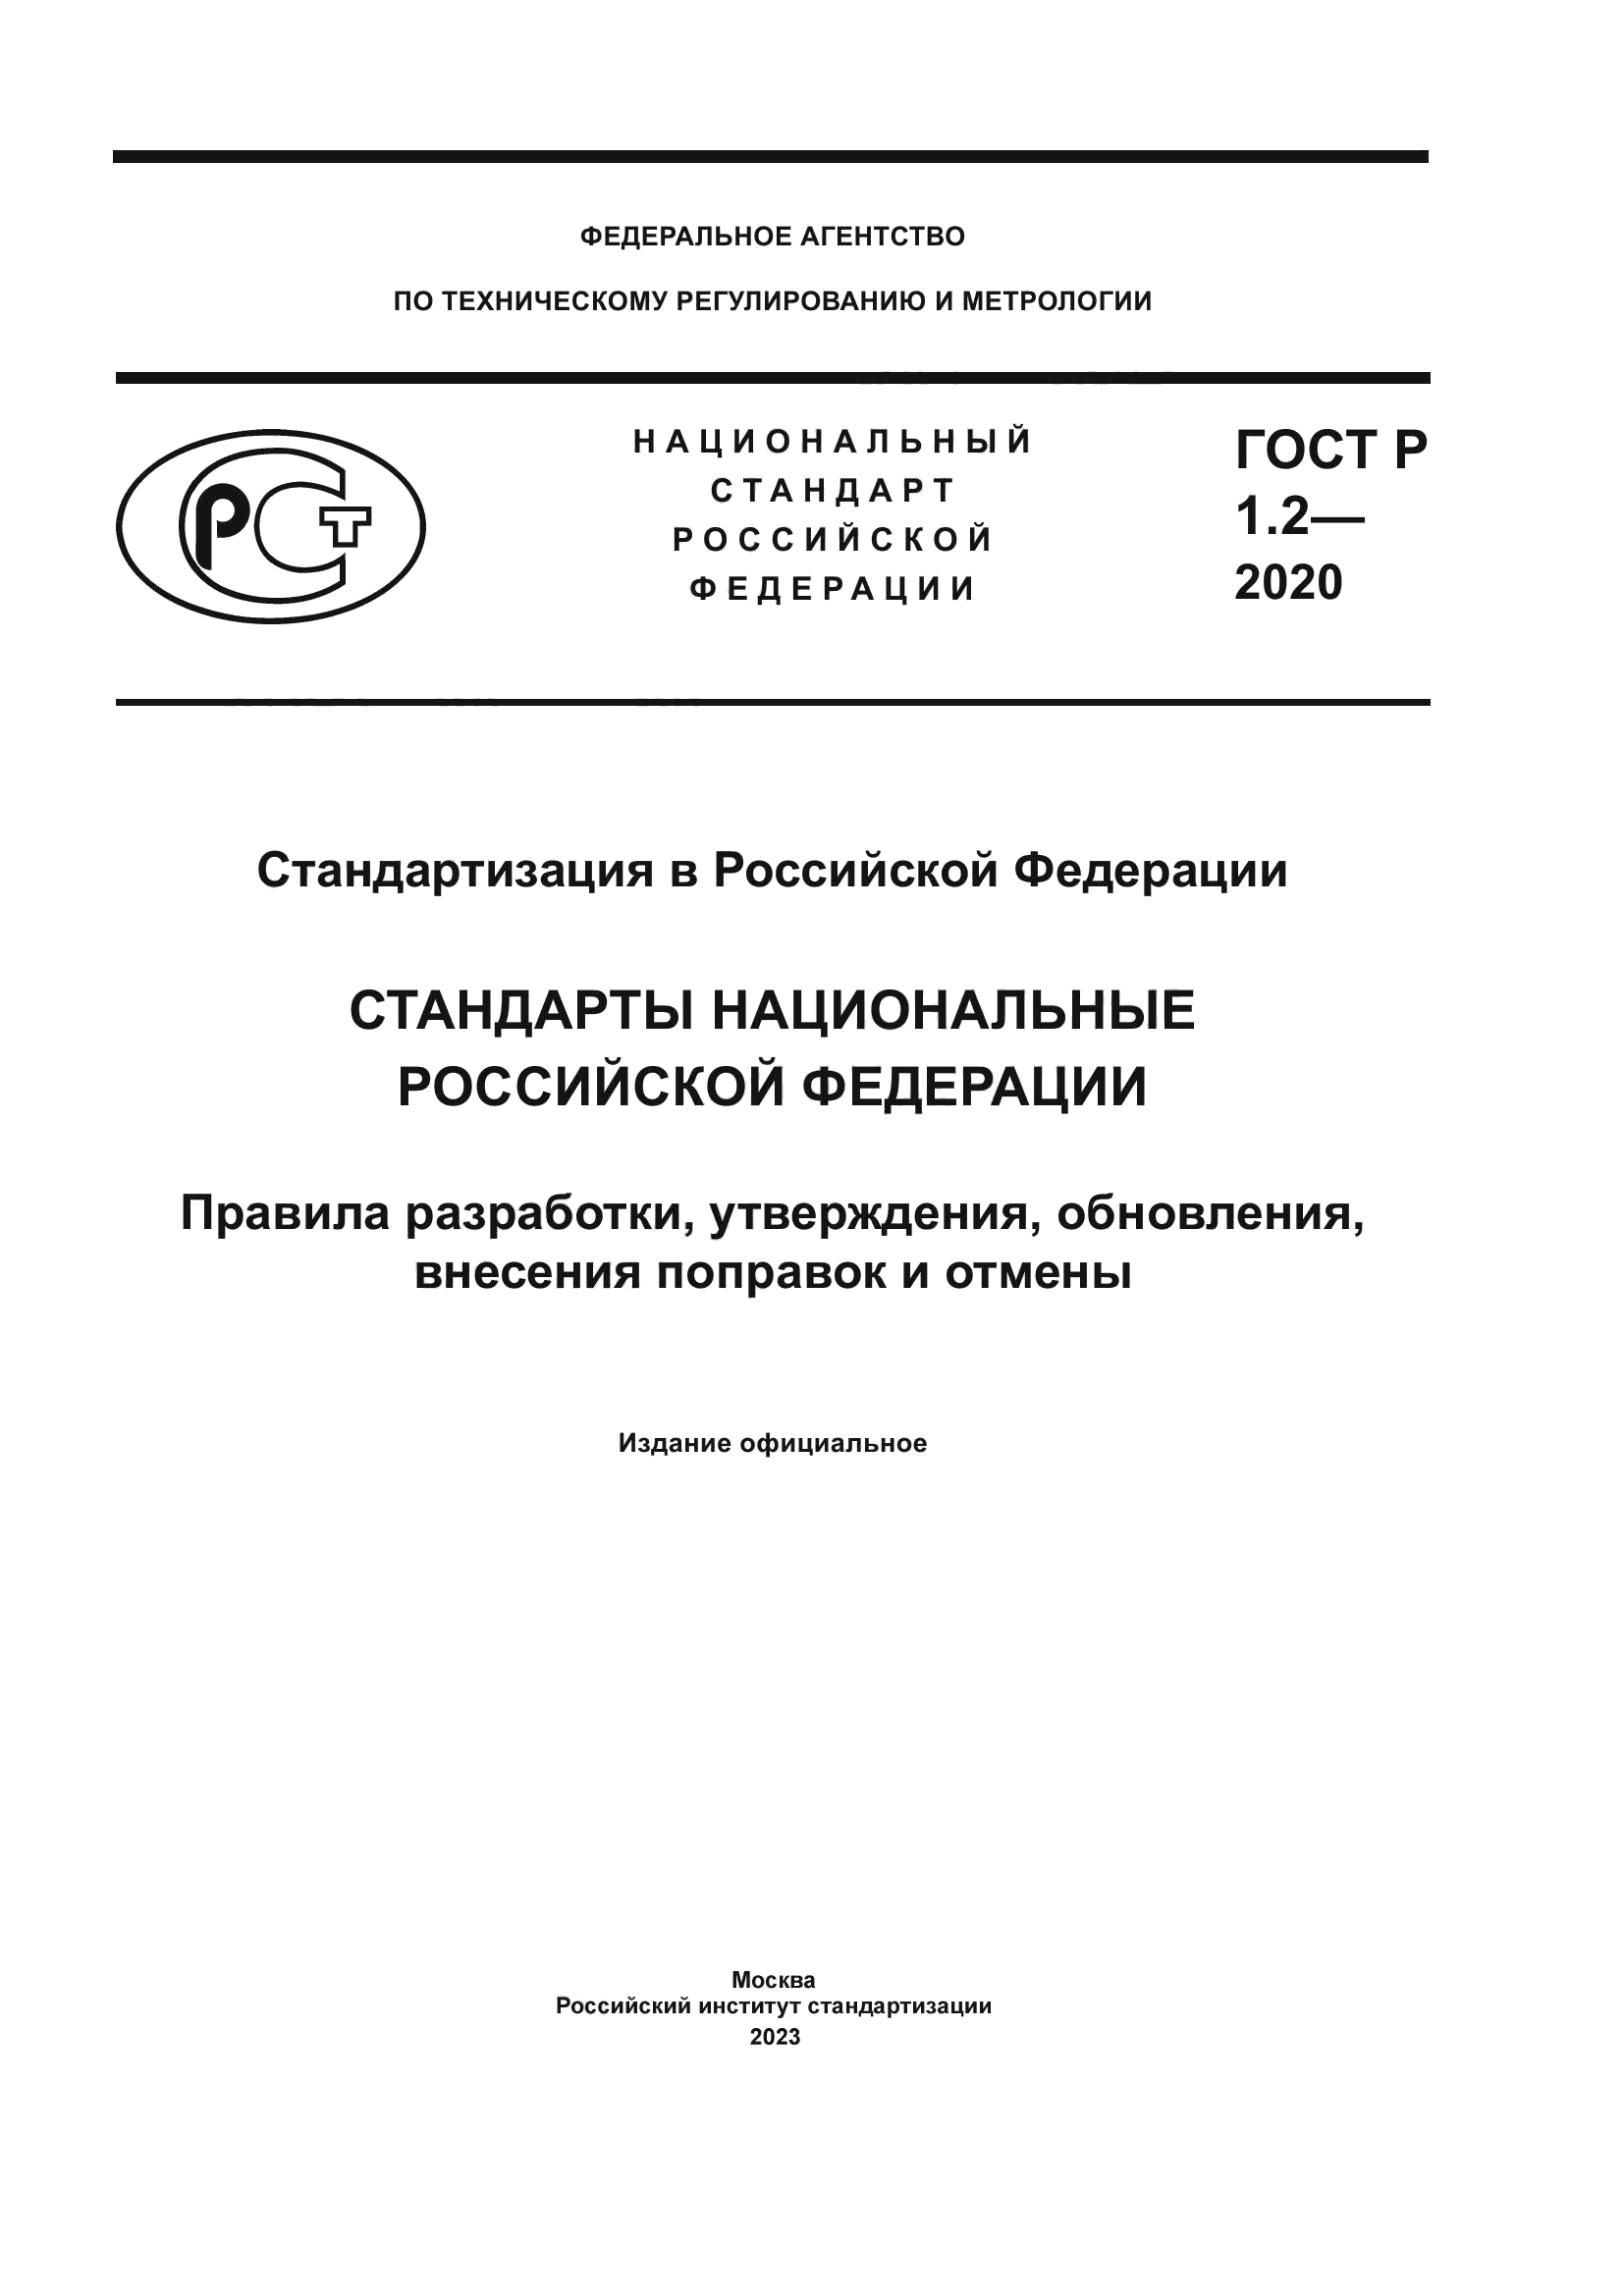 ГОСТ Р 1.2-2020